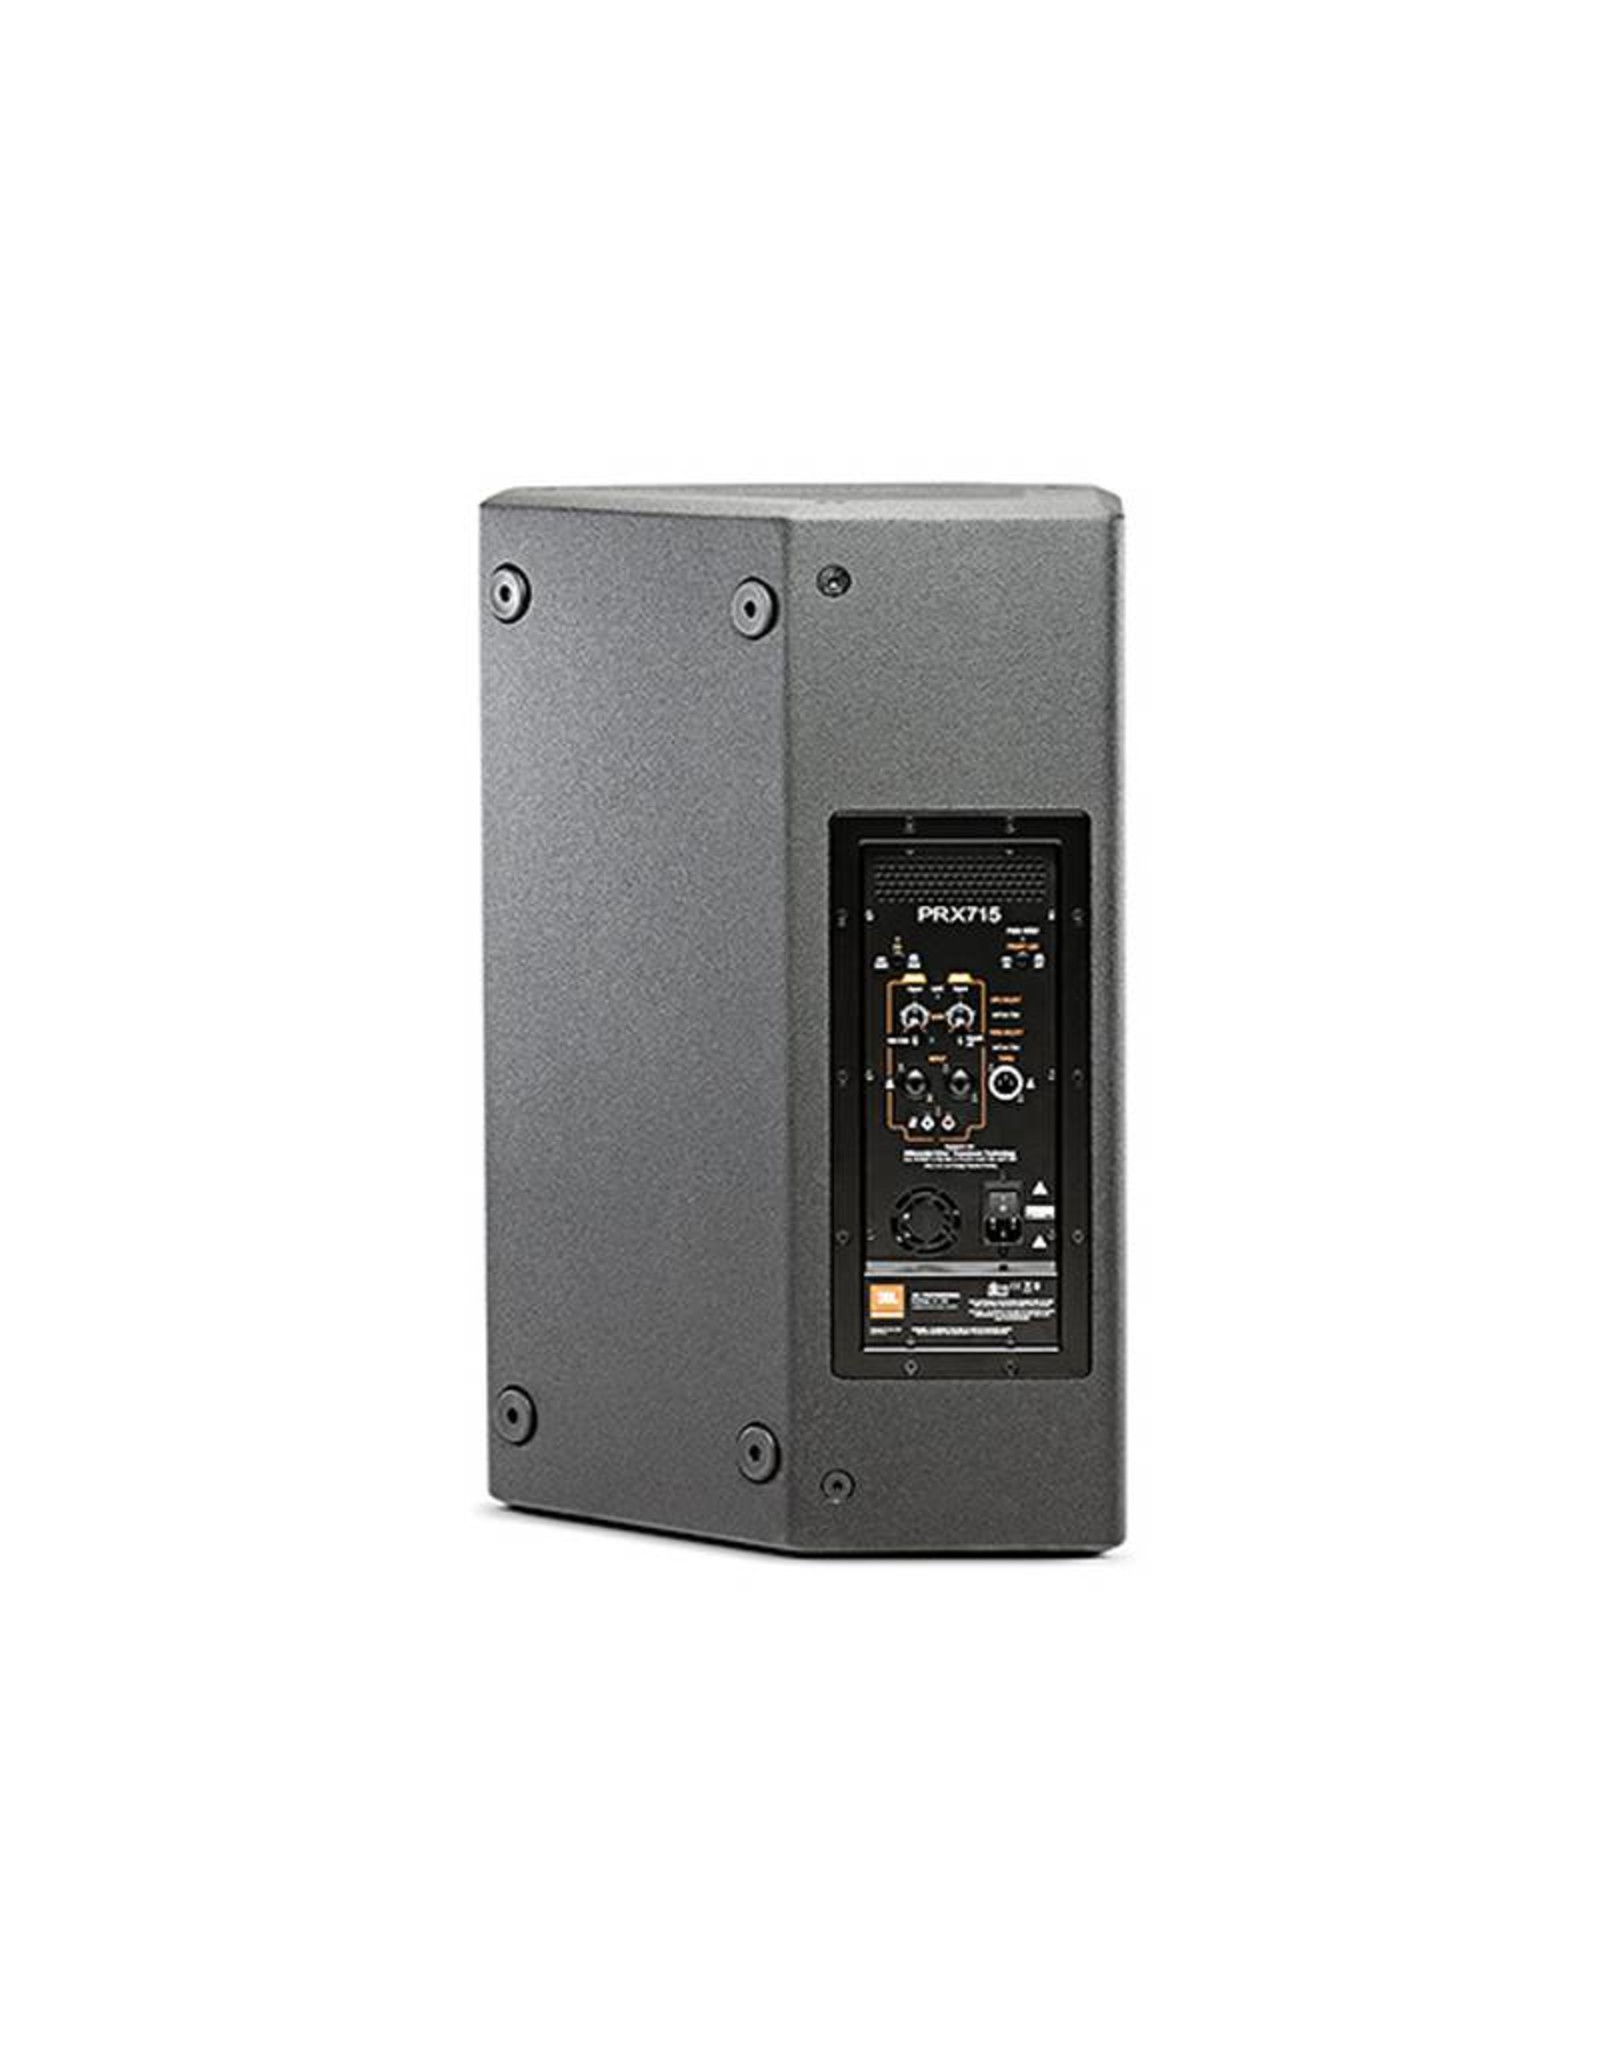 JBL PRX715 Active Amplifier Speaker Box